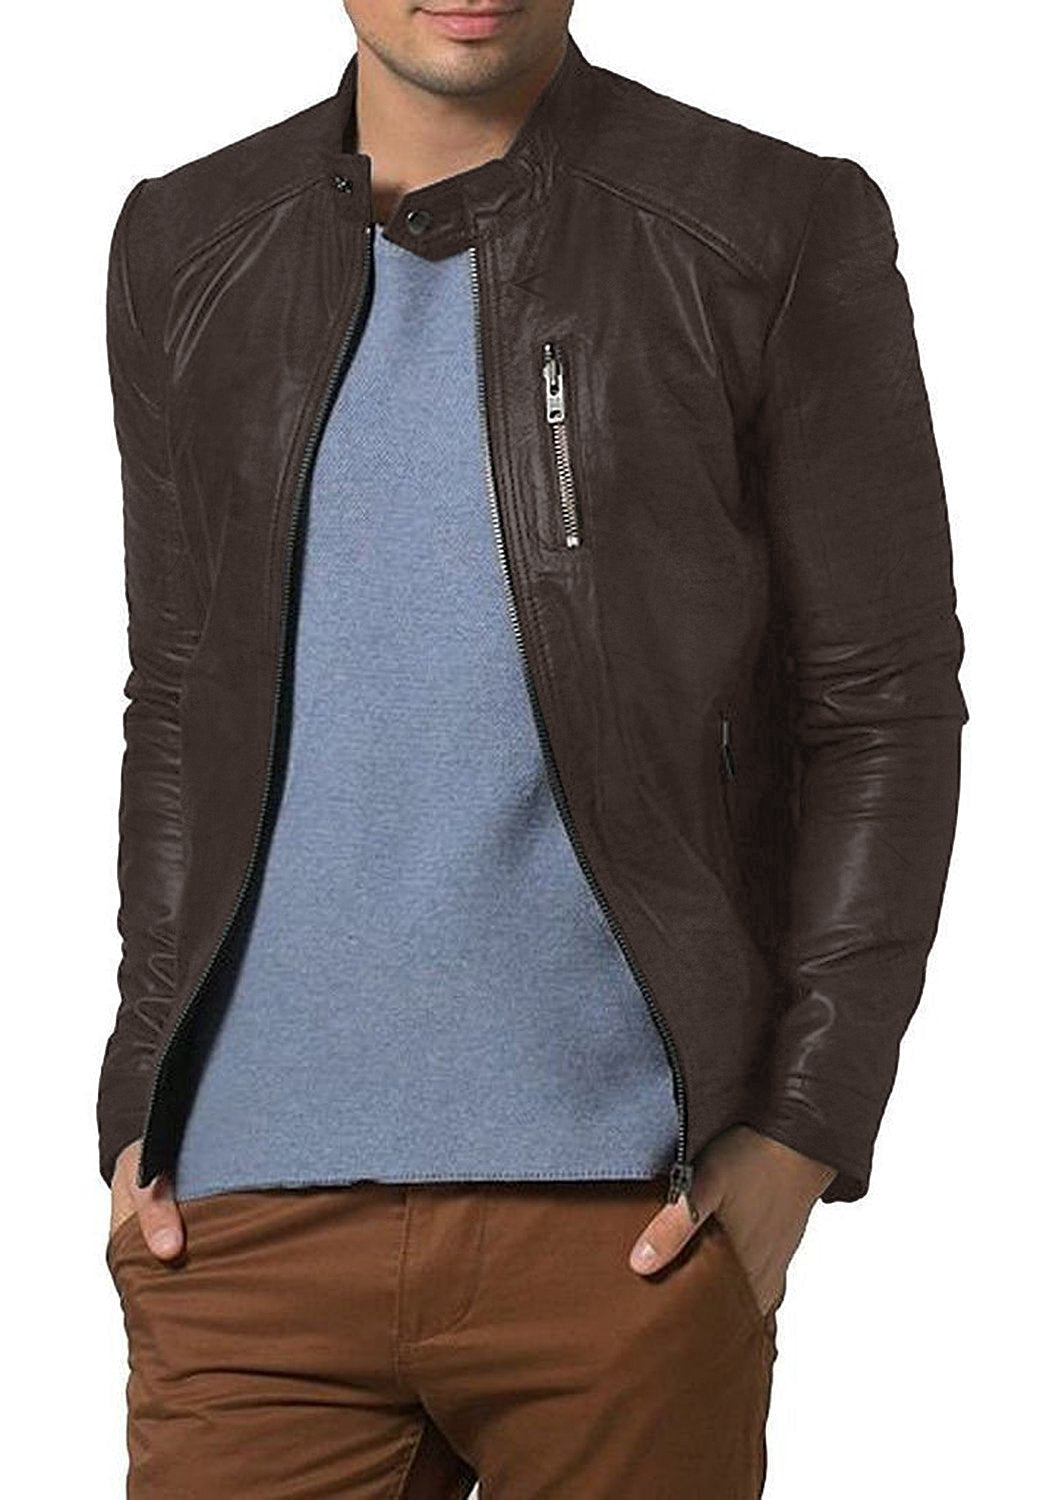 Leather Jackets Hub Mens Genuine Lambskin Leather Jacket (Black, Racer Jacket) - 1501193